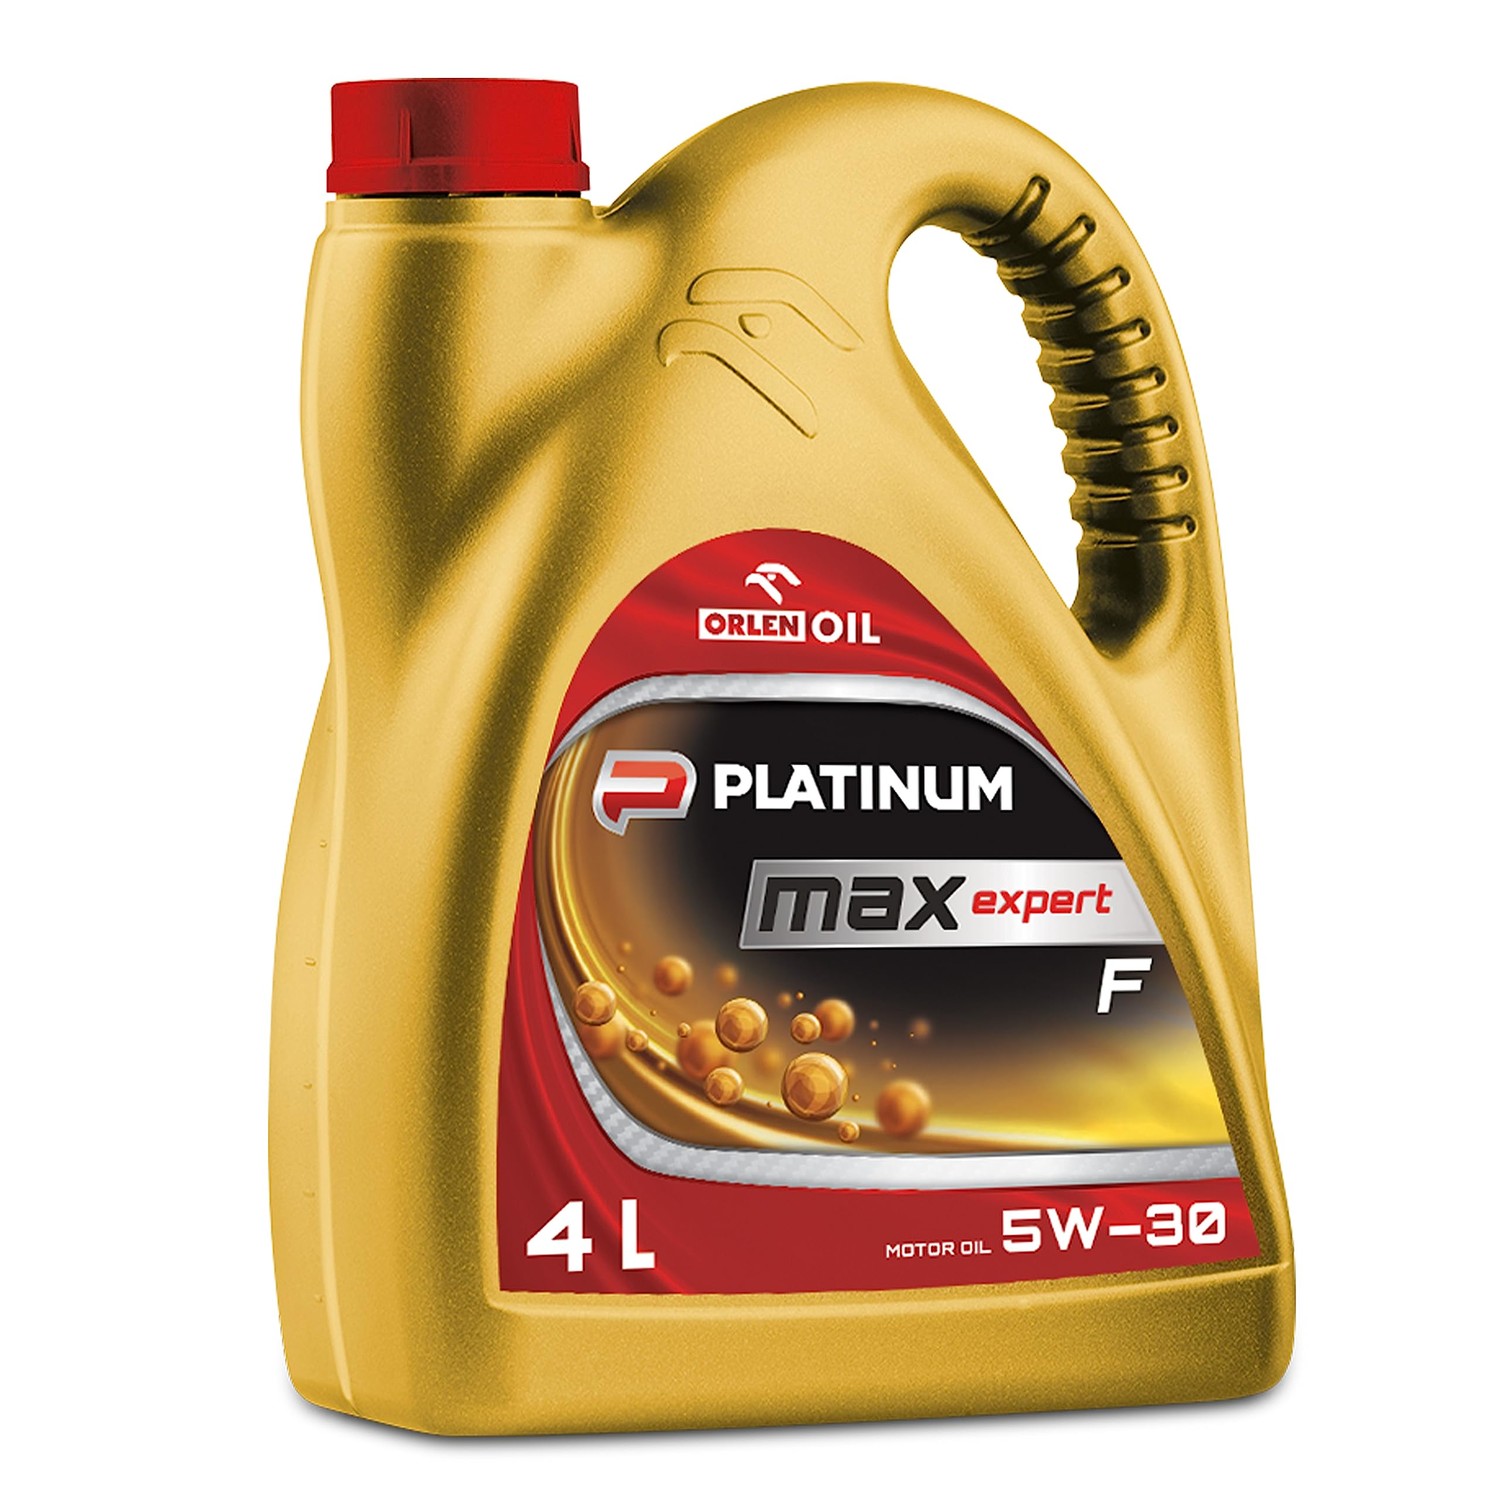 Orlen Oil Platinum Max Expert F 5W-30 4L